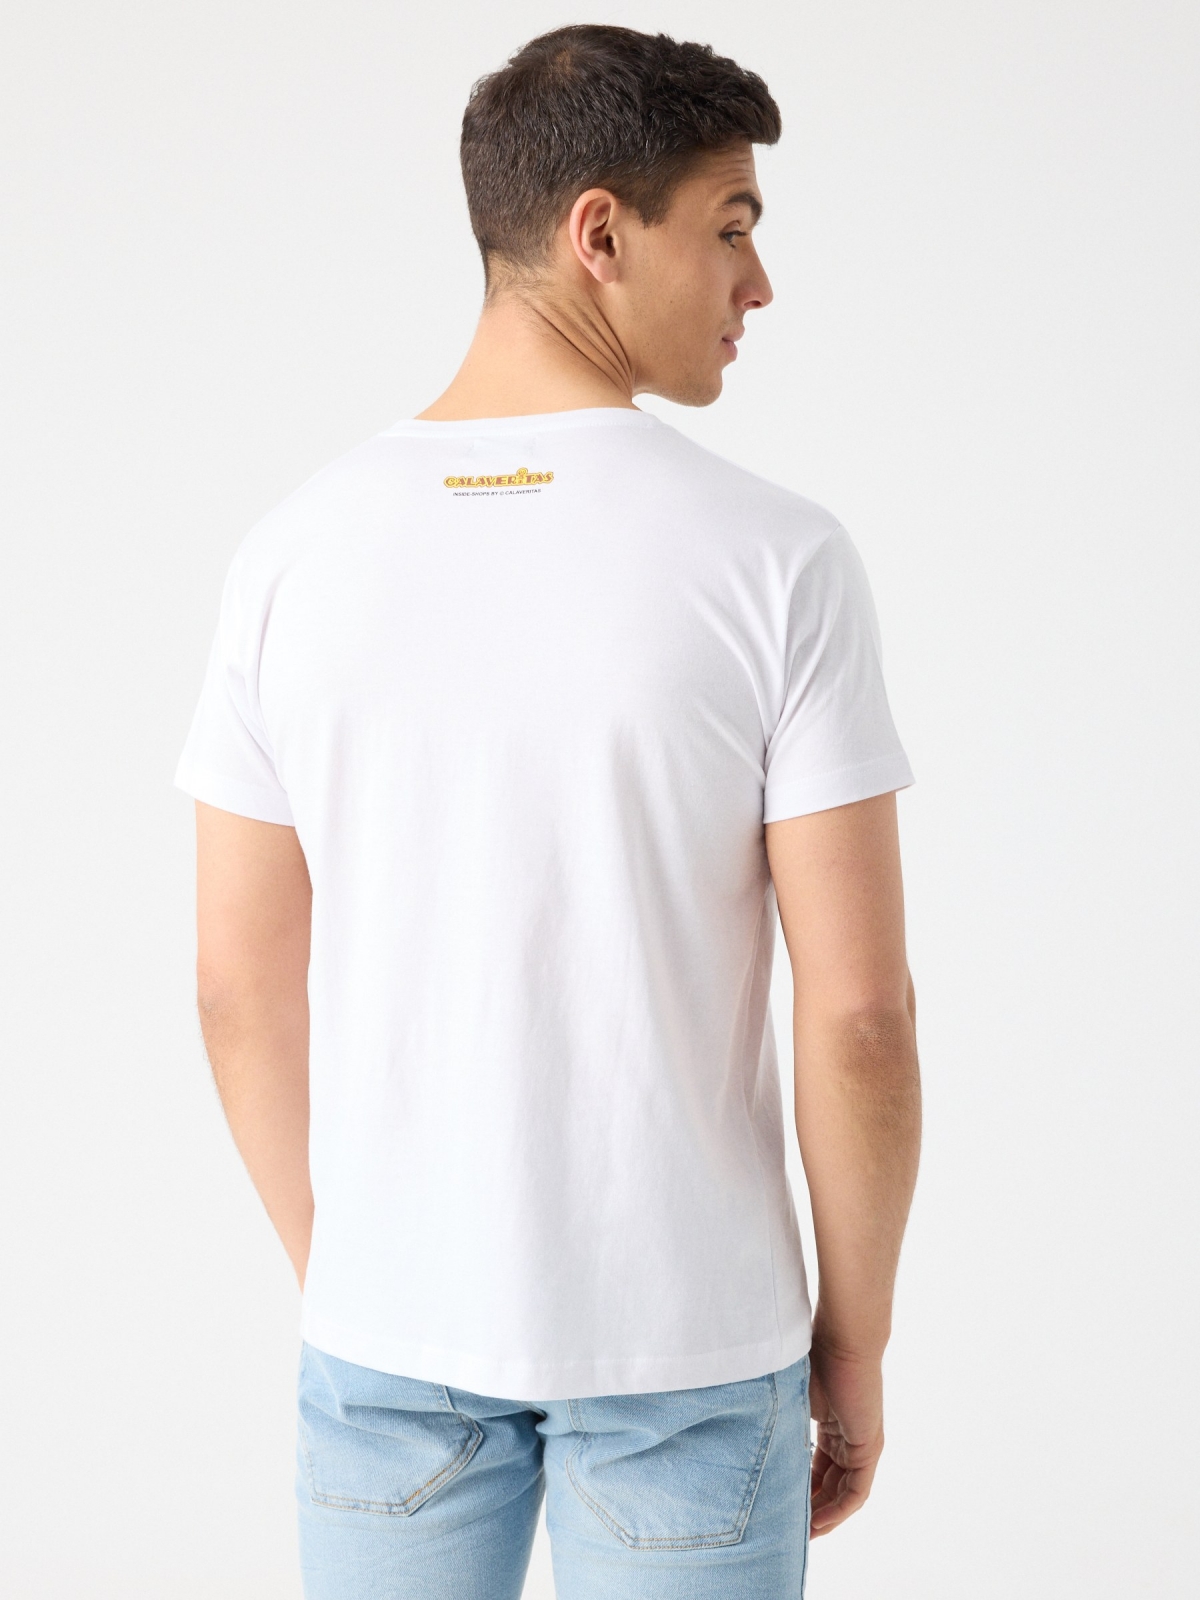 Camiseta Calaveritas Megaskull blanco vista media trasera